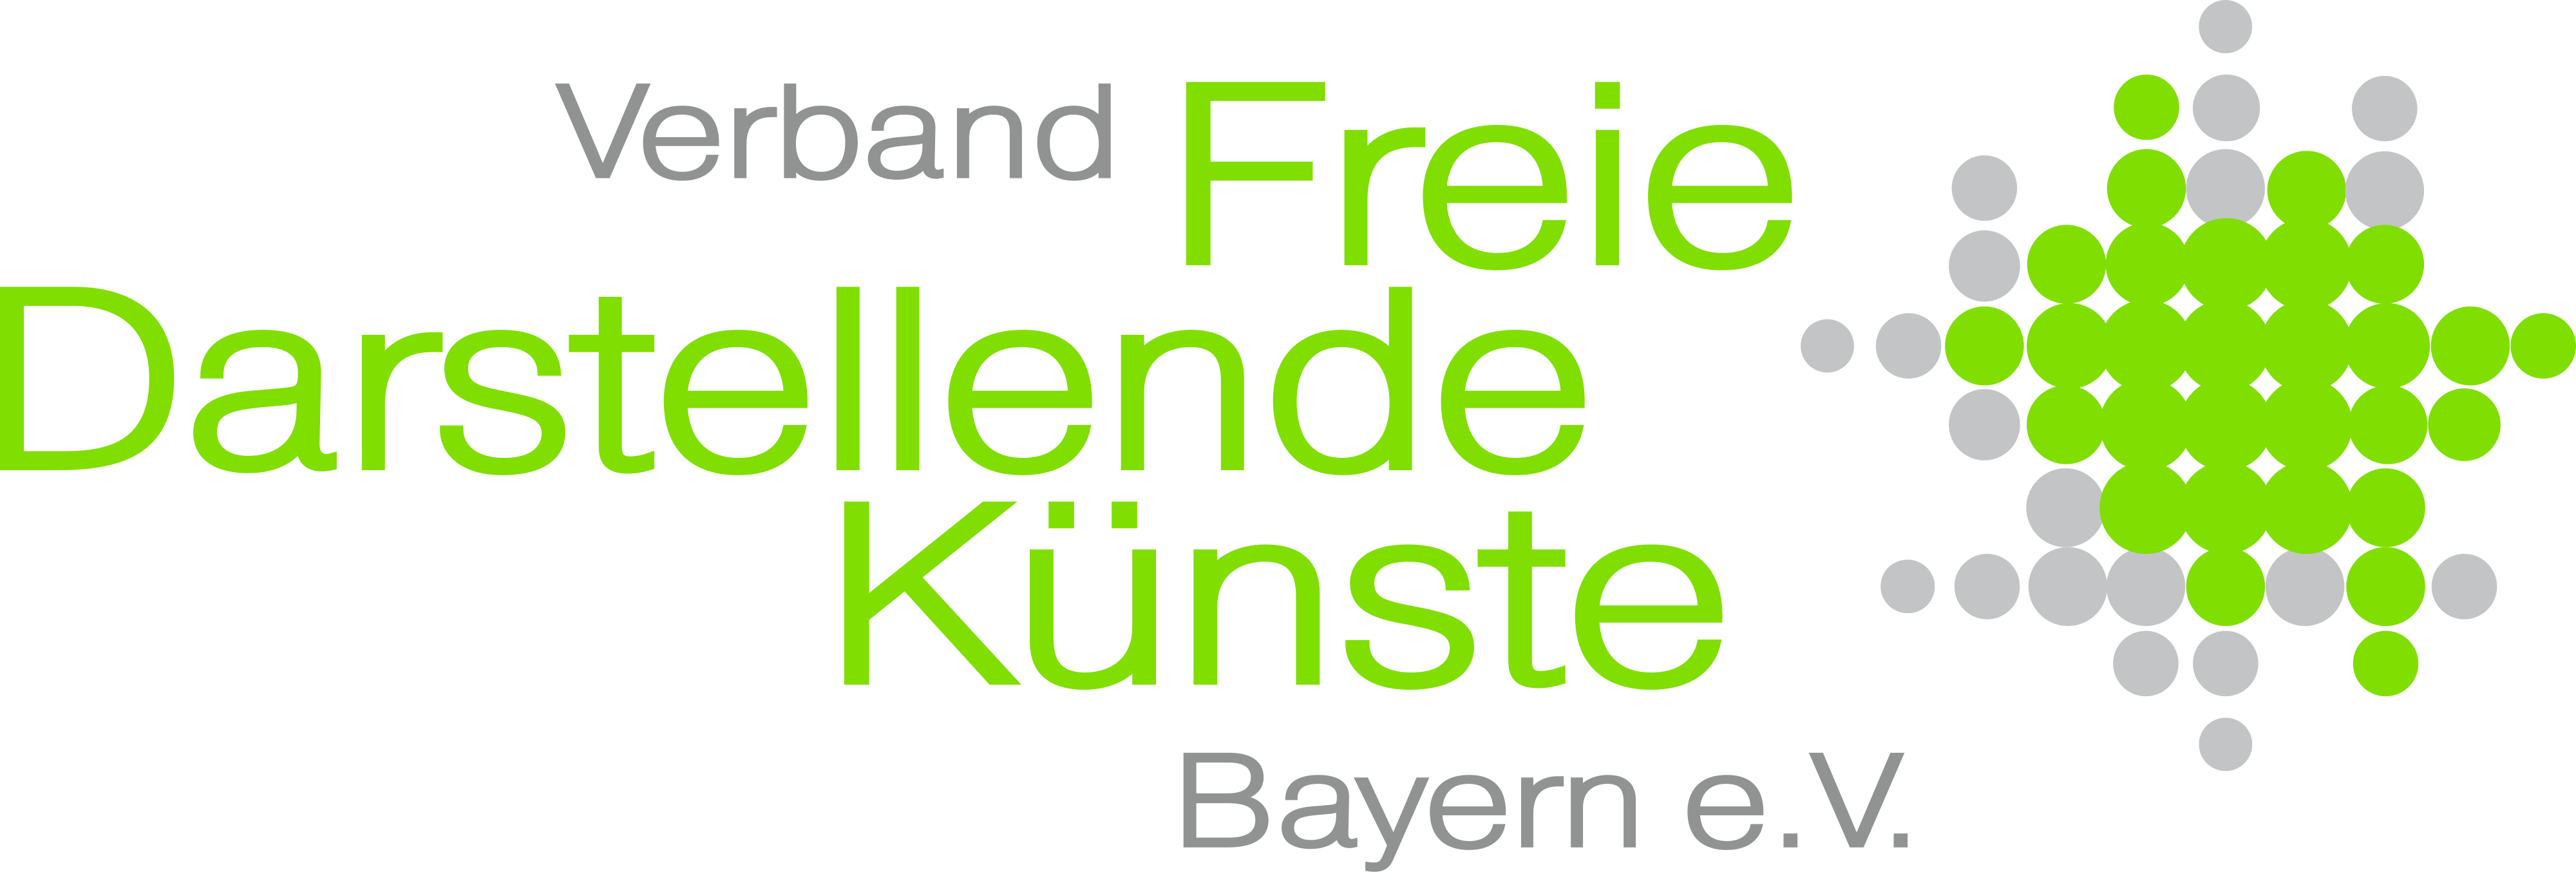 Verband Freie Darstellende Künste Bayern e.V.